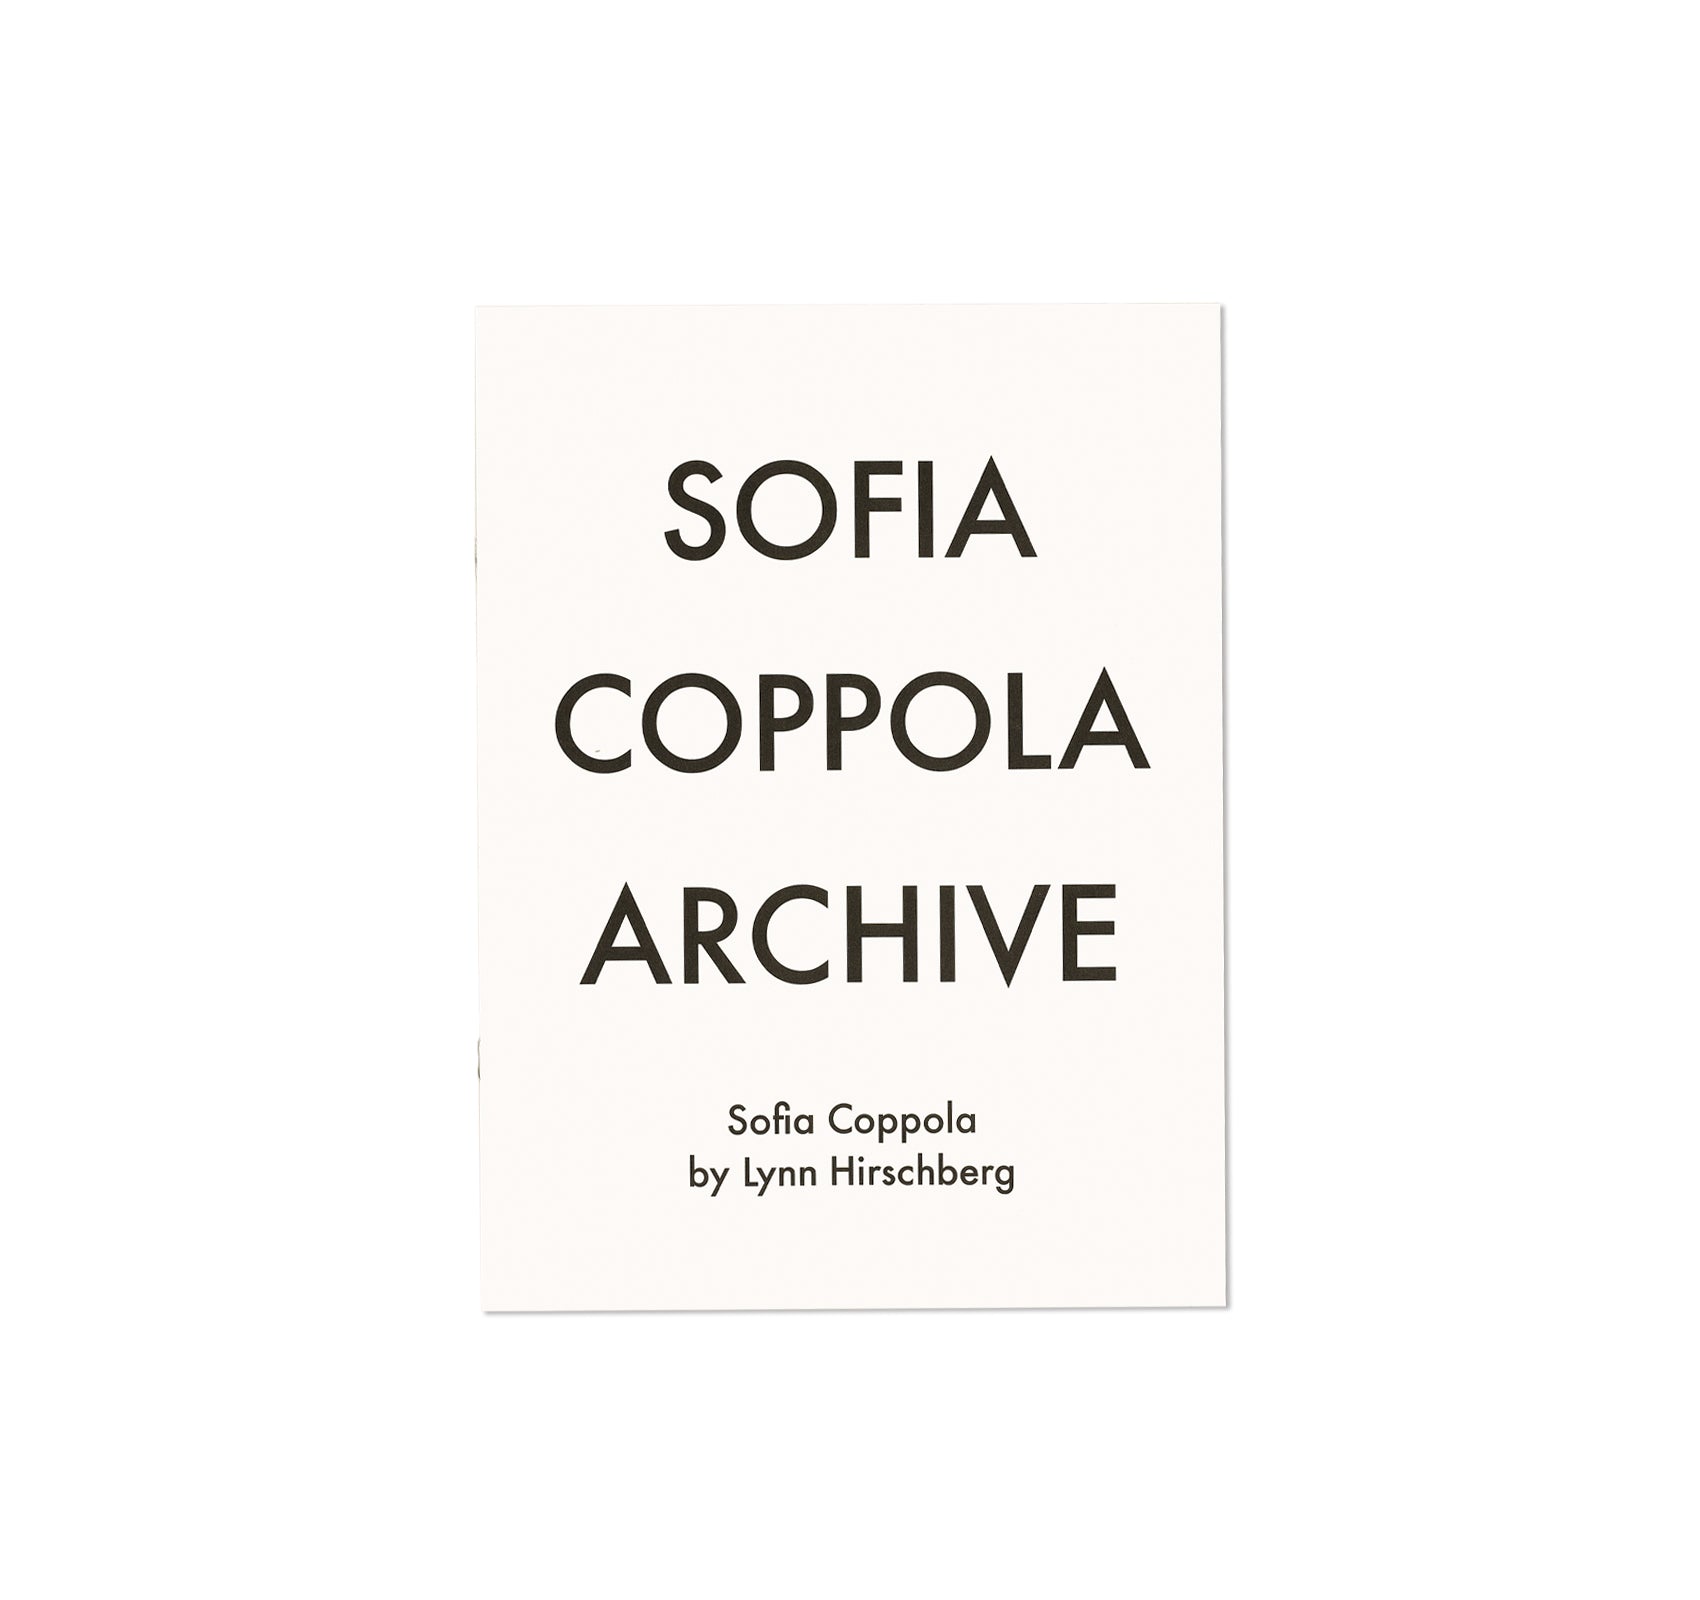 ARCHIVE by Sofia Coppola [SALE]